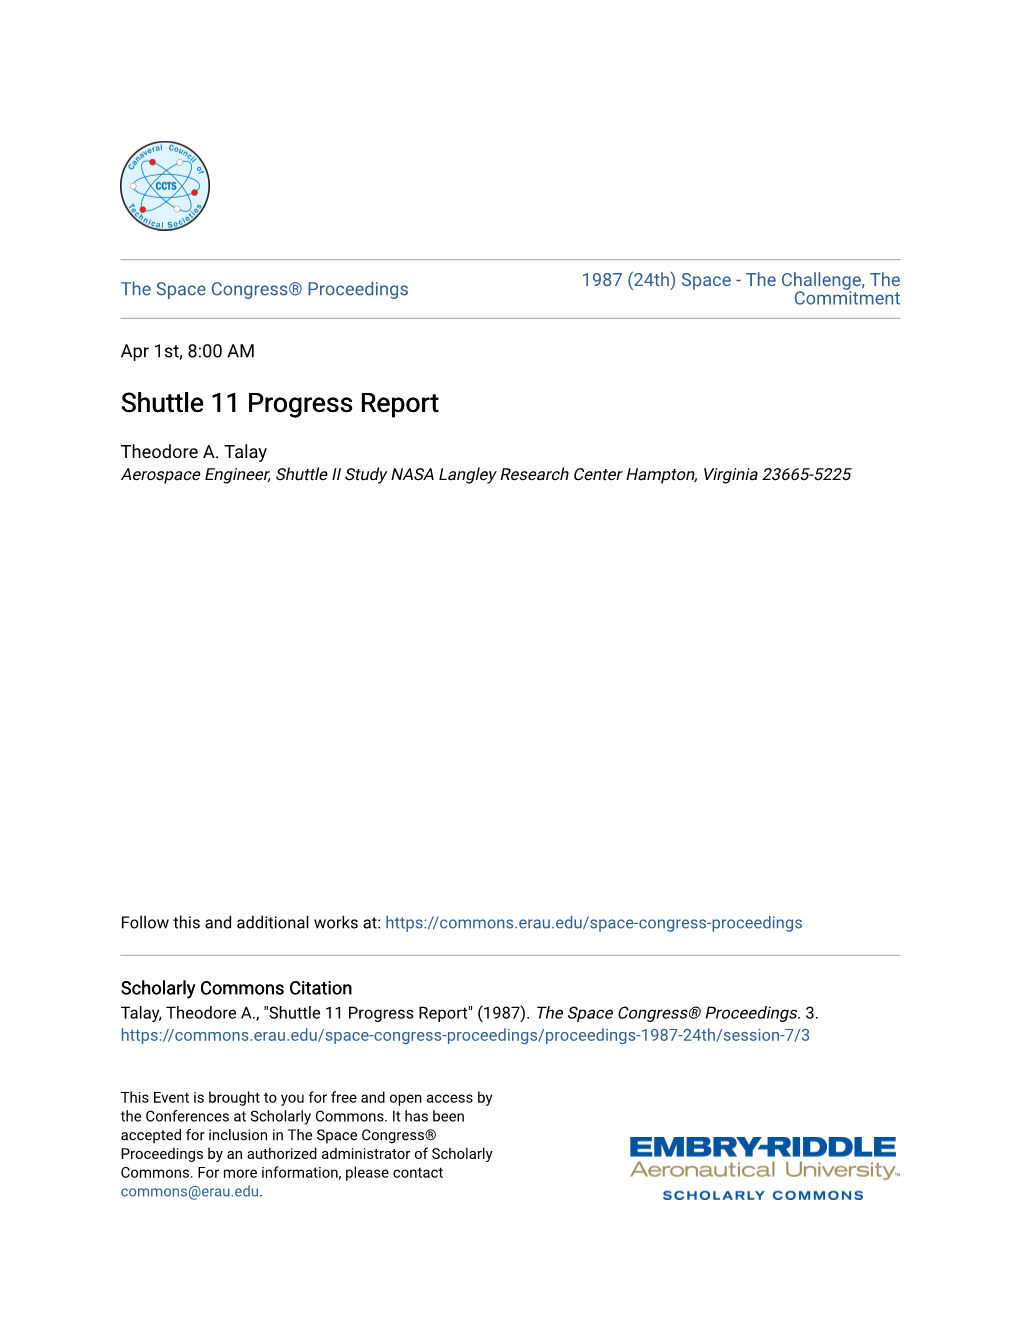 Shuttle 11 Progress Report